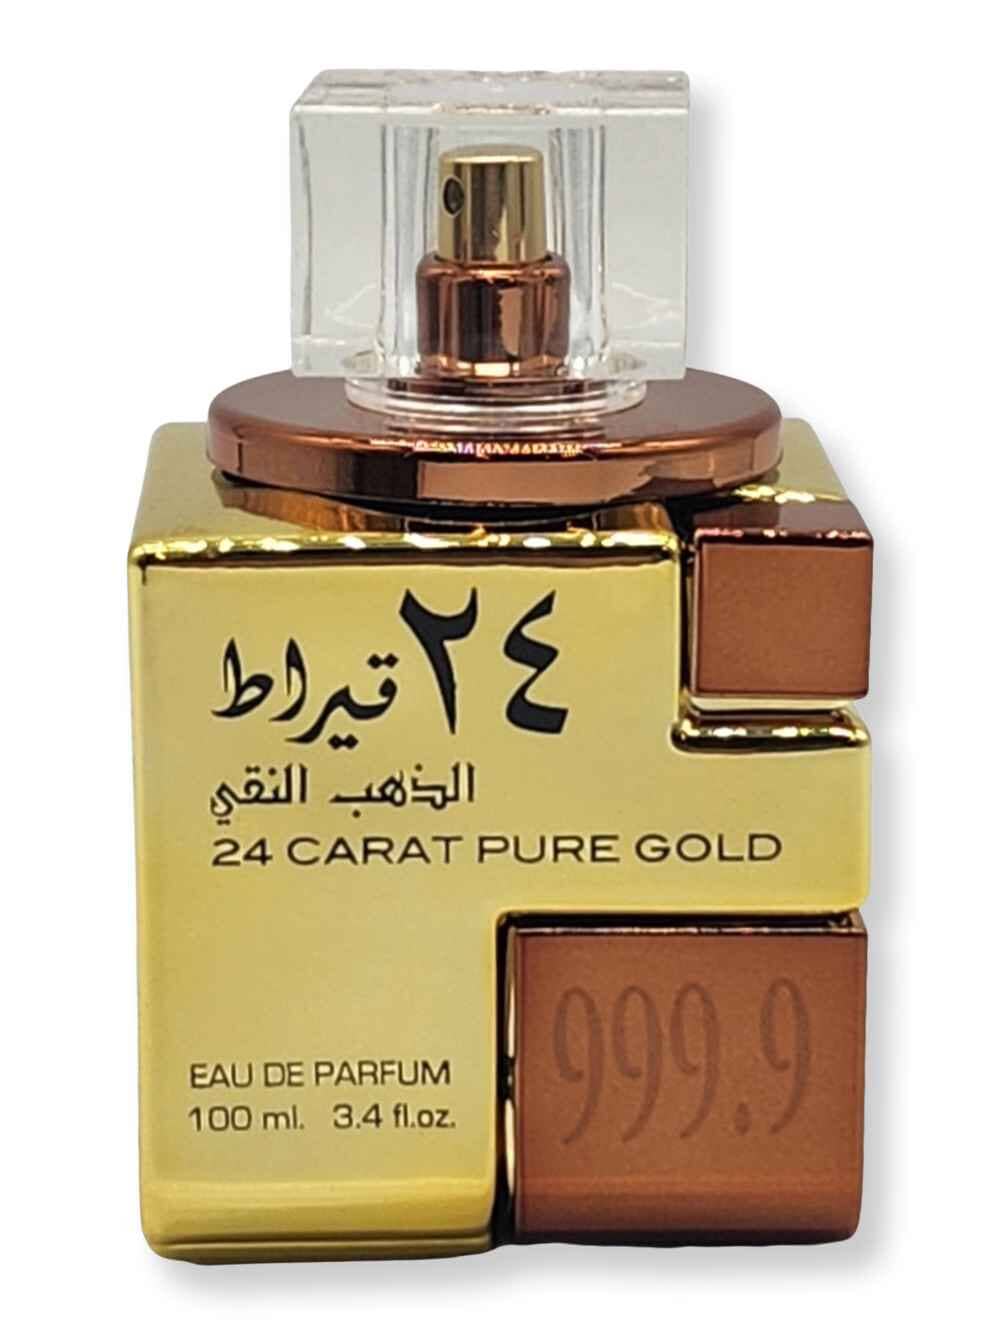 Lattafa Lattafa 24 Carat Pure Gold EDP Spray 100 ml Perfume 